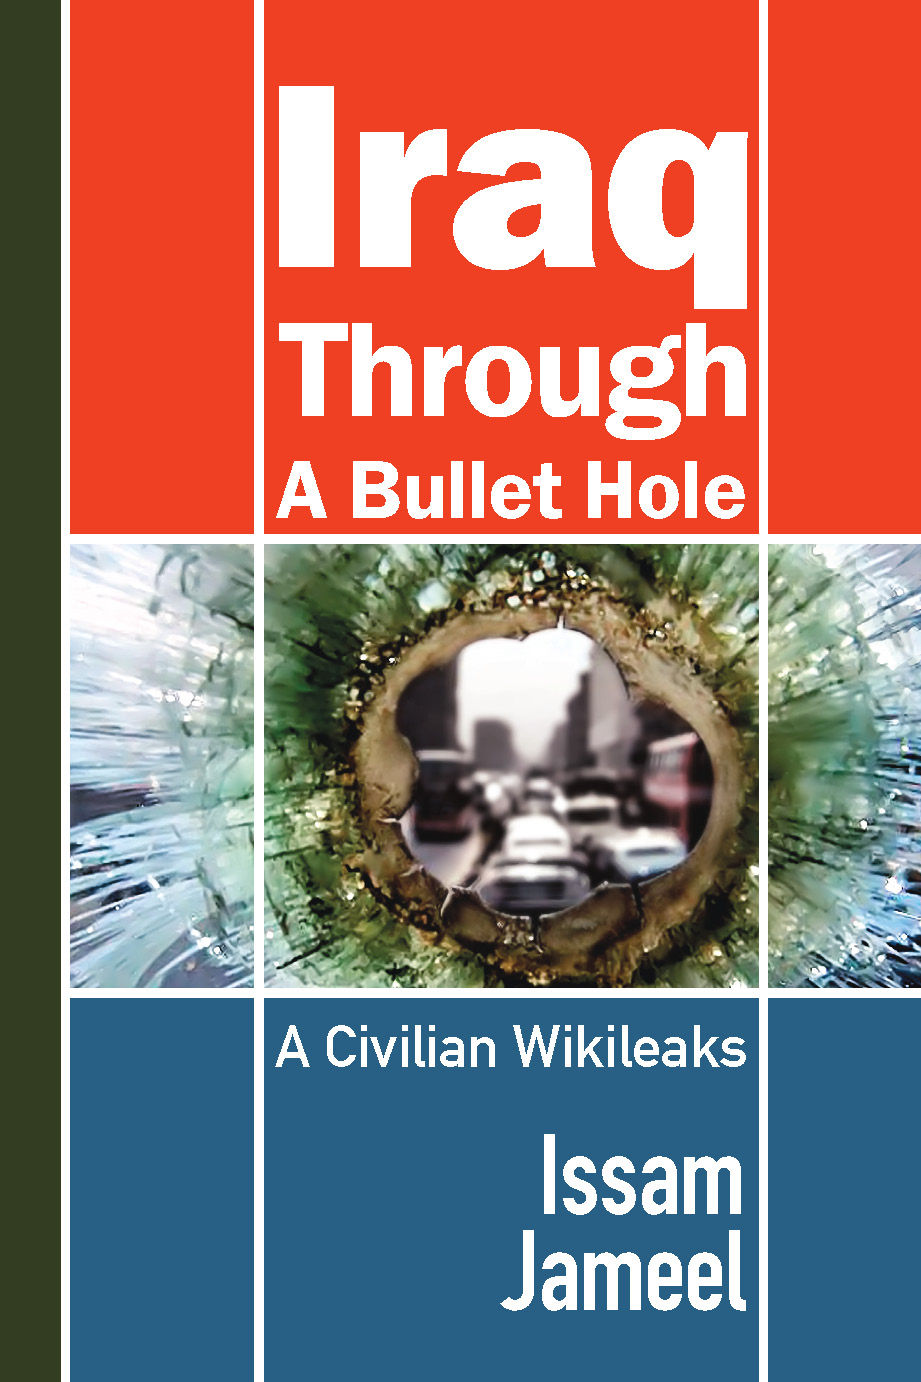 Iraq Through a Bullet Hole